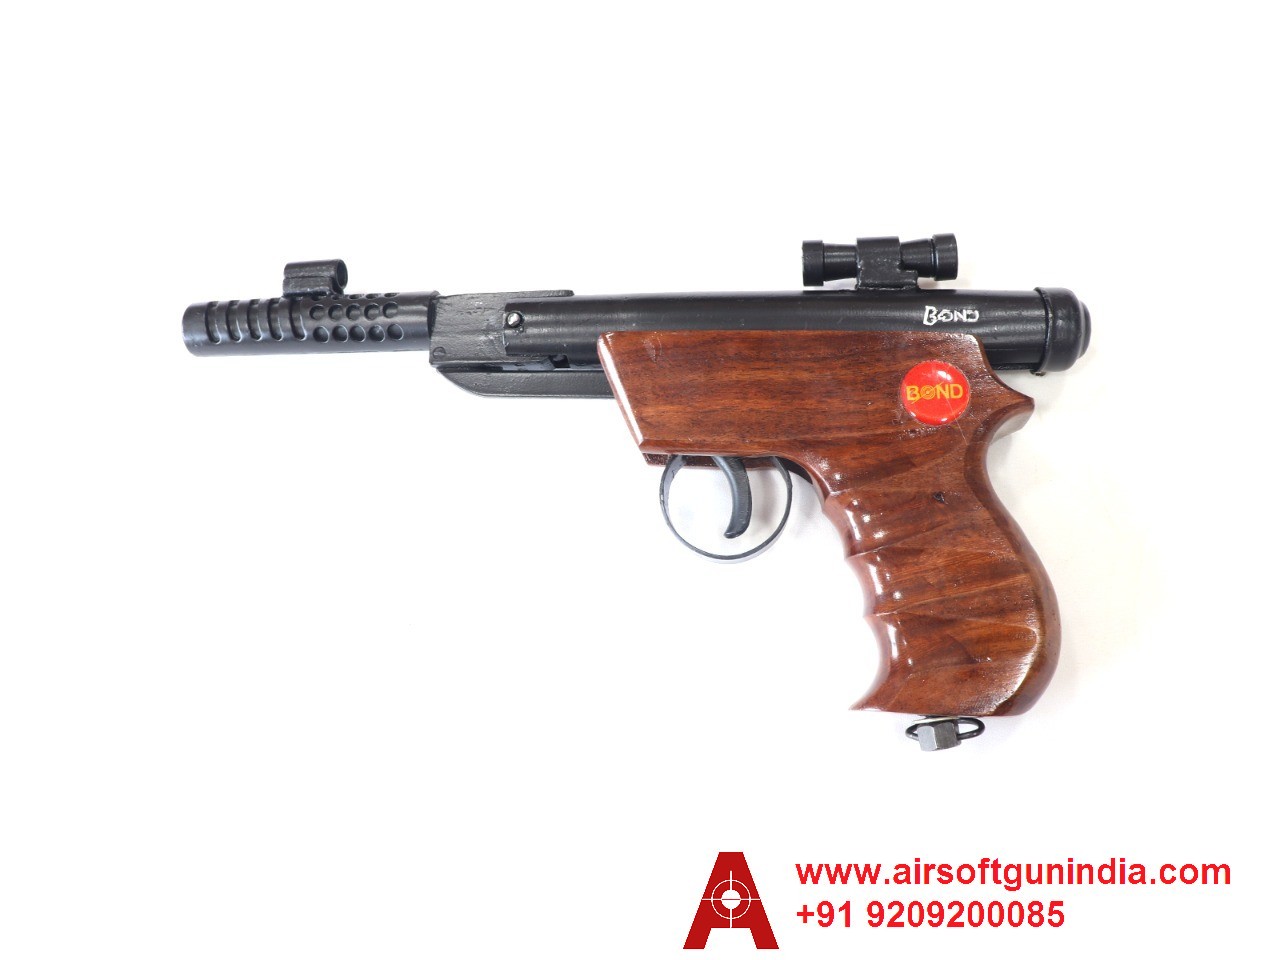 Bond Target Plus Wooden Single-Shot .177 Caliber / 4.5 Mm Indian Air Pistol By Airsoft Gun India